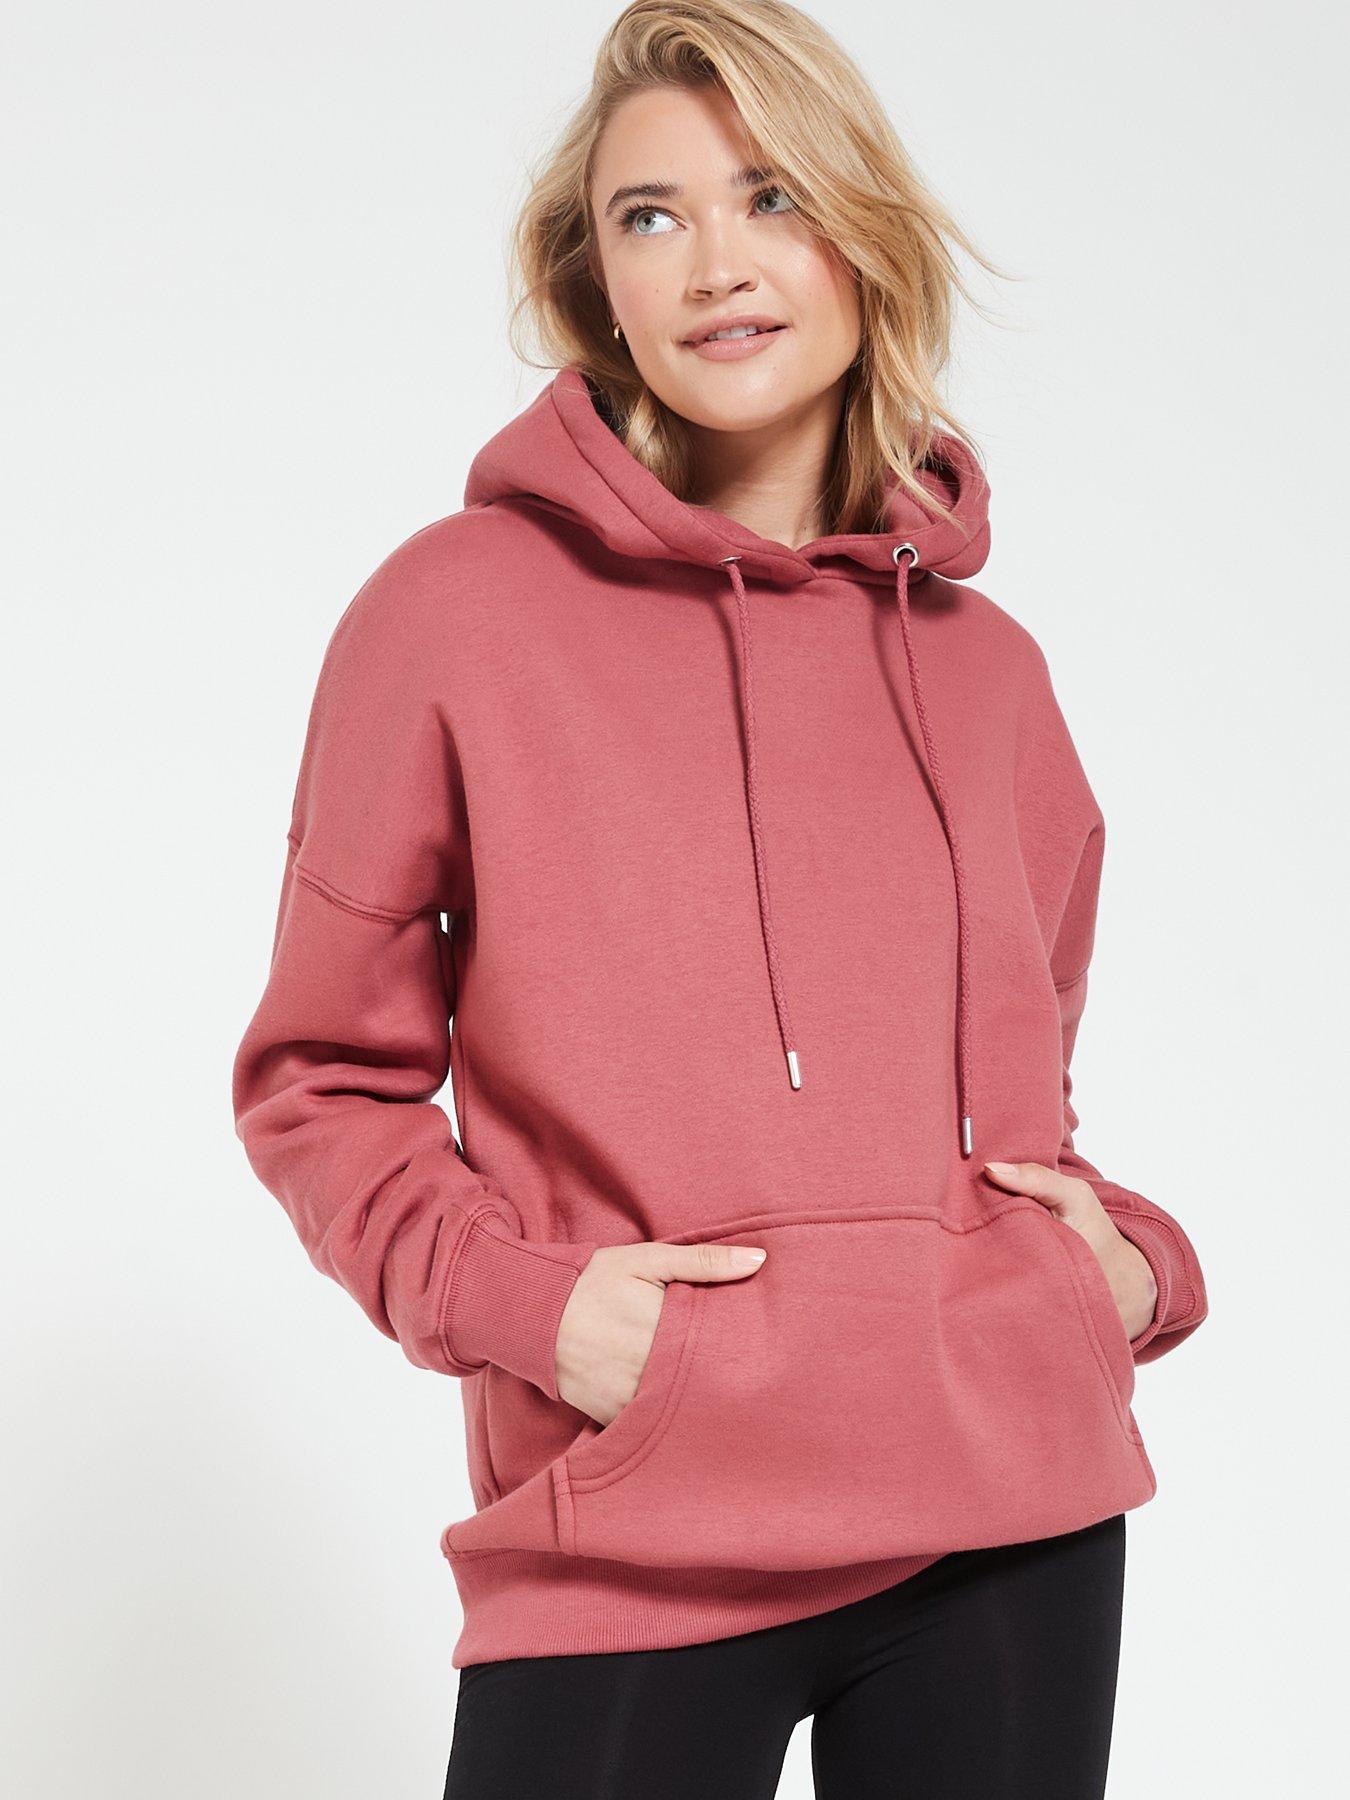 discount 90% WOMEN FASHION Jumpers & Sweatshirts Oversize Zara sweatshirt Pink M 